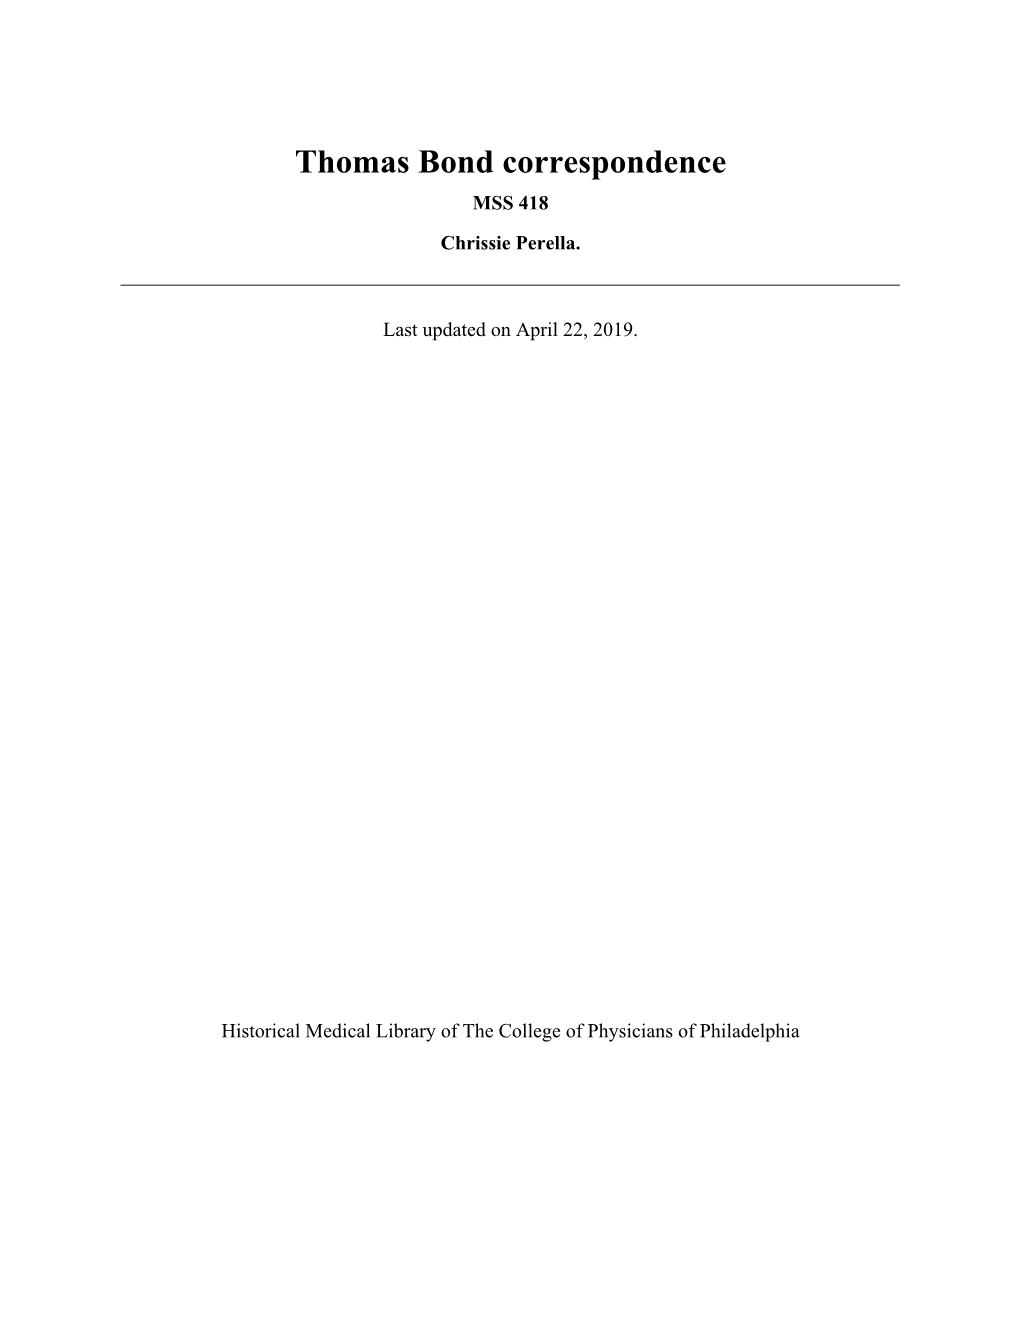 Thomas Bond Correspondence MSS 418 Chrissie Perella